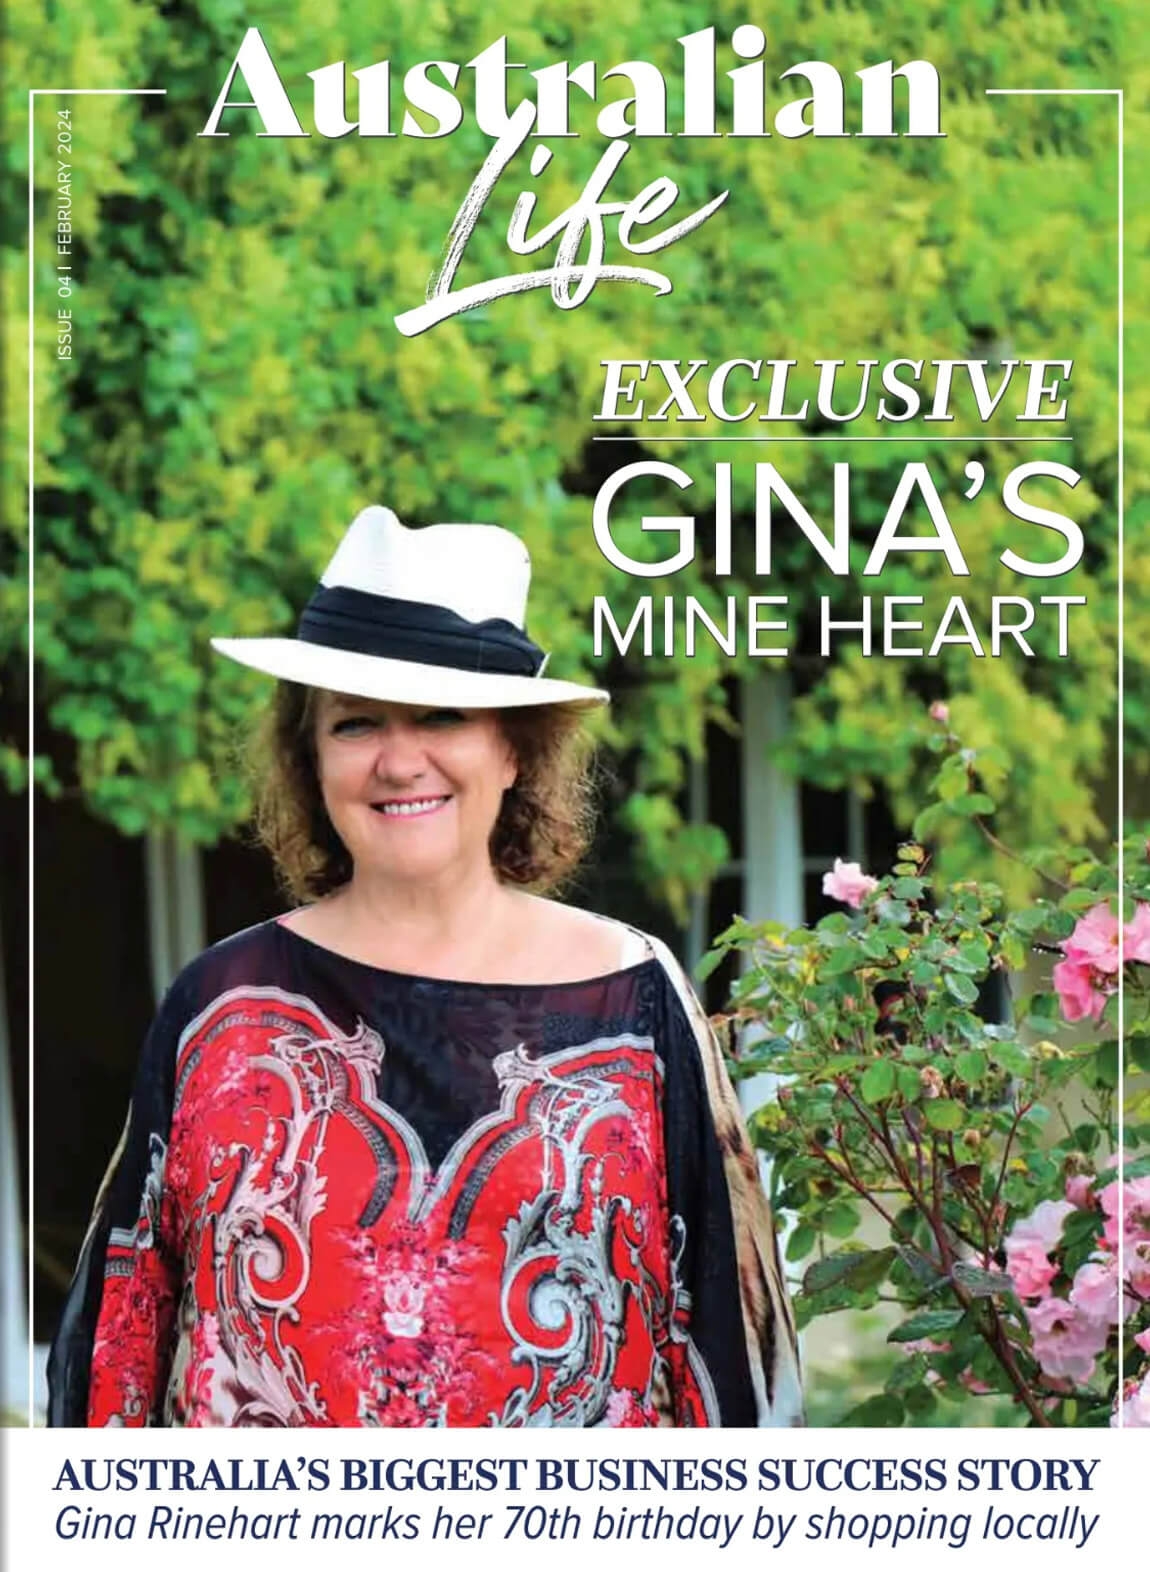 Australian Life | Gina’s mine heart